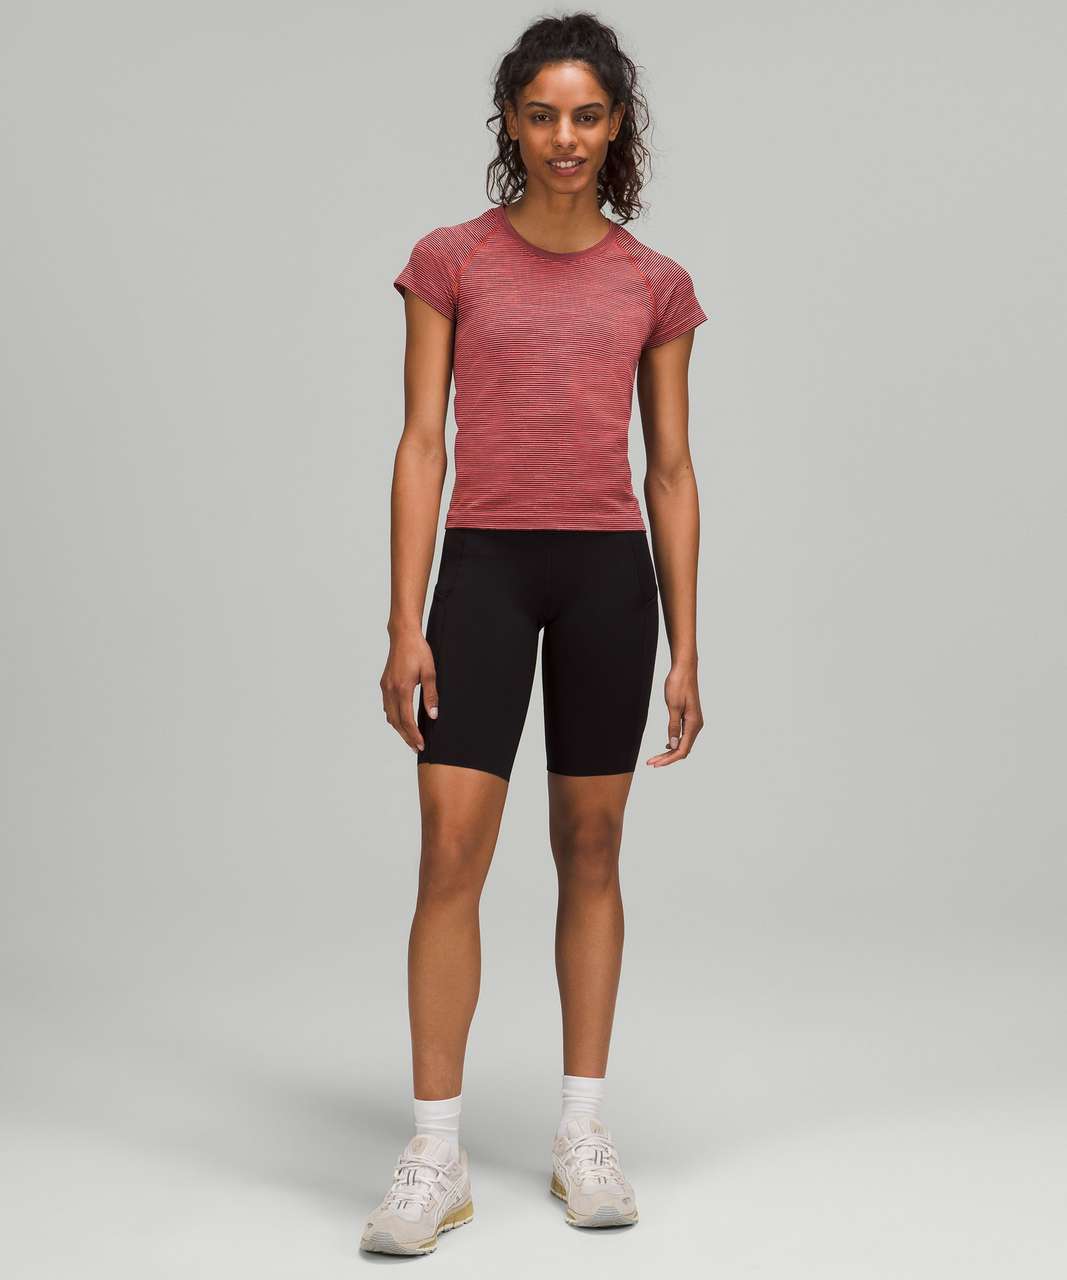 Lululemon Swiftly Tech Short Sleeve Shirt 2.0 *Race Length - Chroma Check Stripe Raspberry Cream / Black / Flare Multi